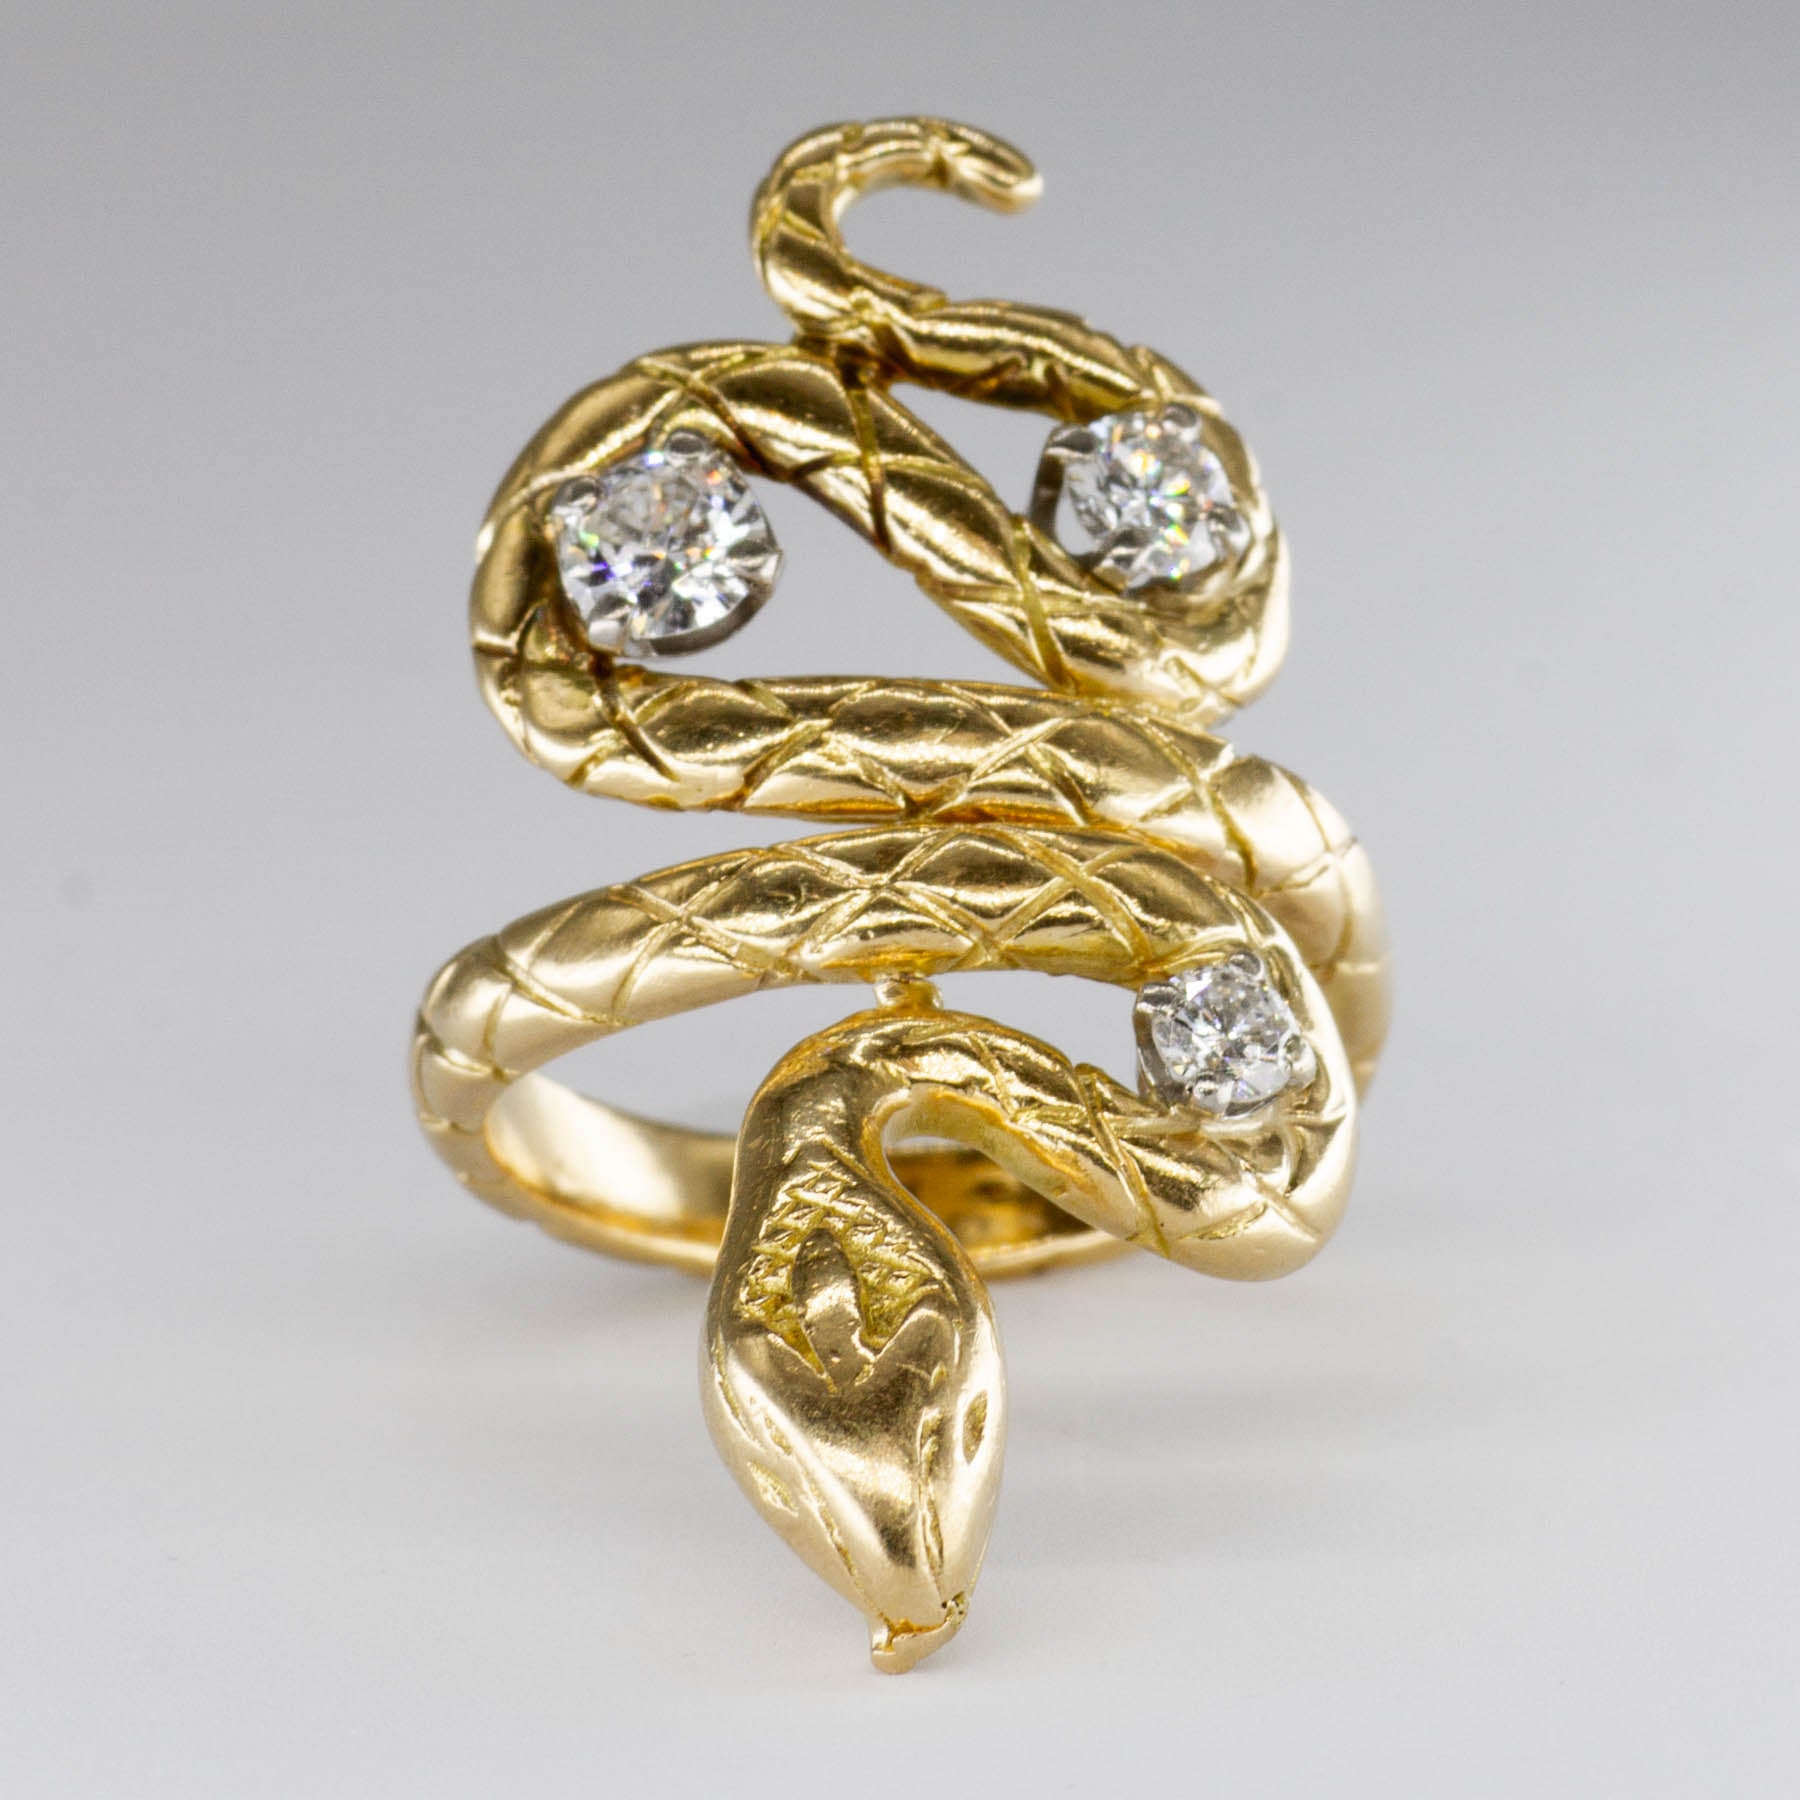 Vintage Snake Ring with Diamonds | 0.71 ctw | SZ 9 |